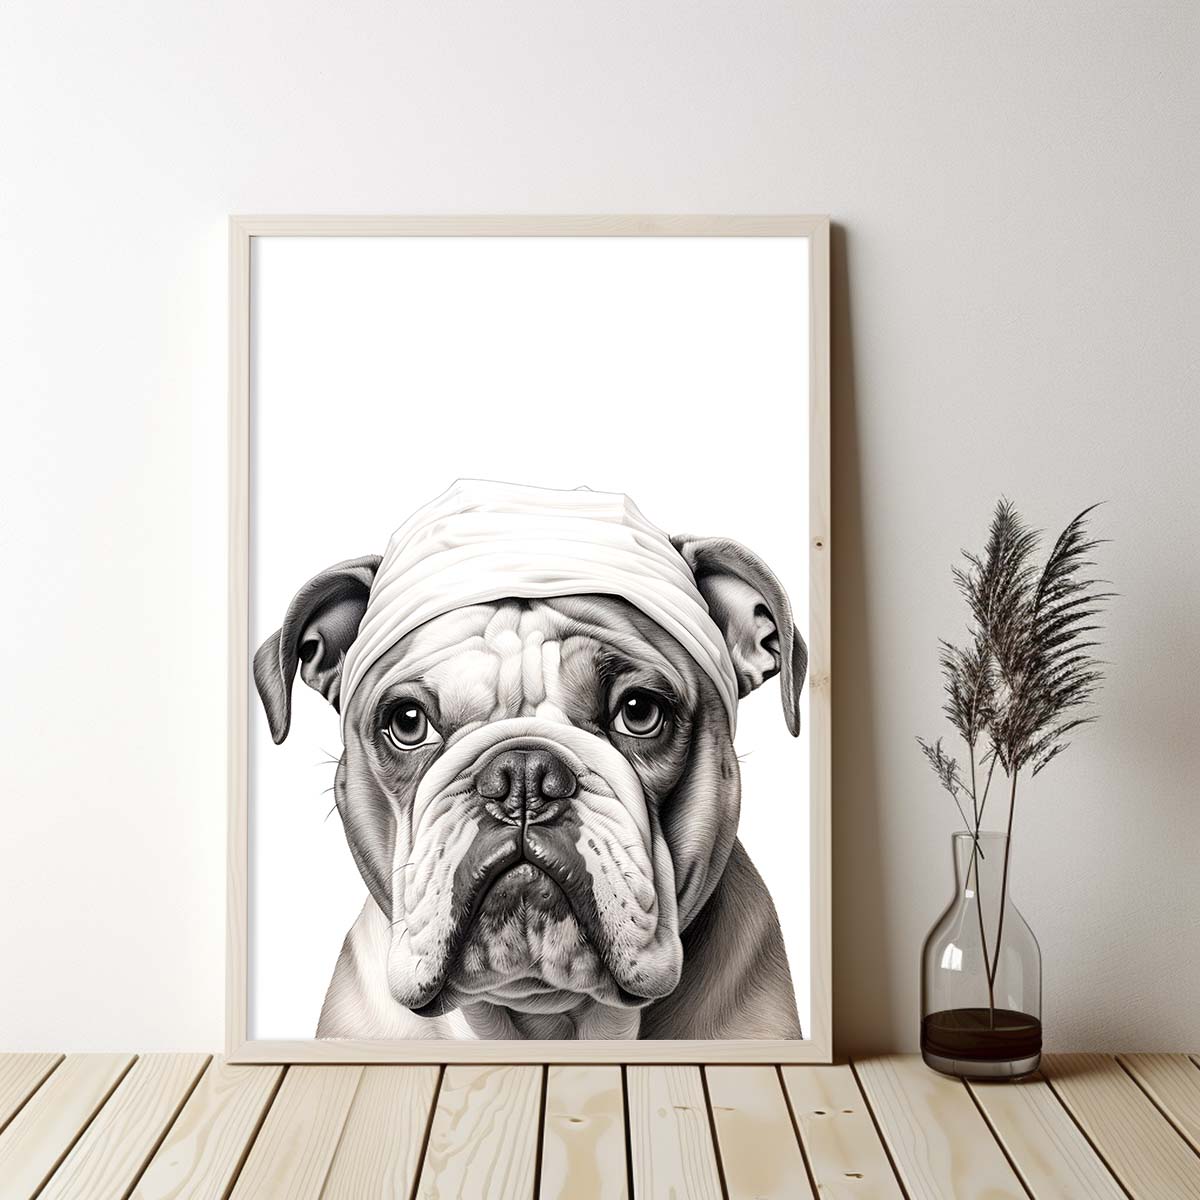 Bulldog With Toilet Paper Canvas Art, Bulldog With Toilet Paper, Funny Dog Art, Bathroom Wall Decor, Home Decor, Bathroom Wall Art, Dog Wall Decor, Animal Decor, Pet Gift